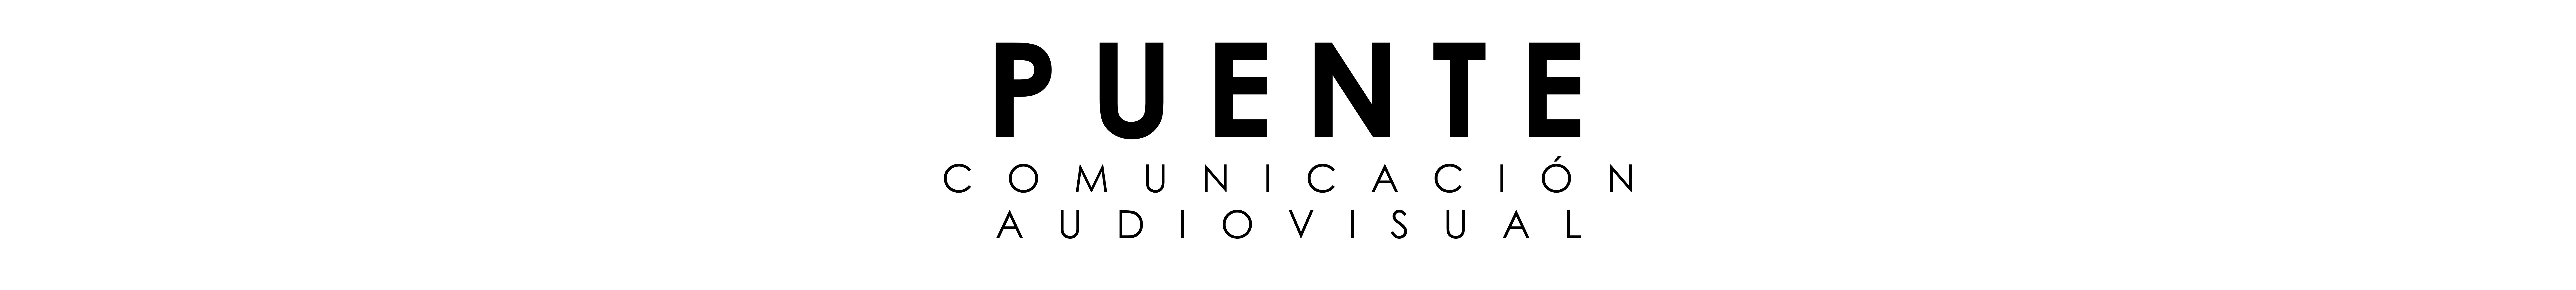 Profielbanner van Puente Audiovisual